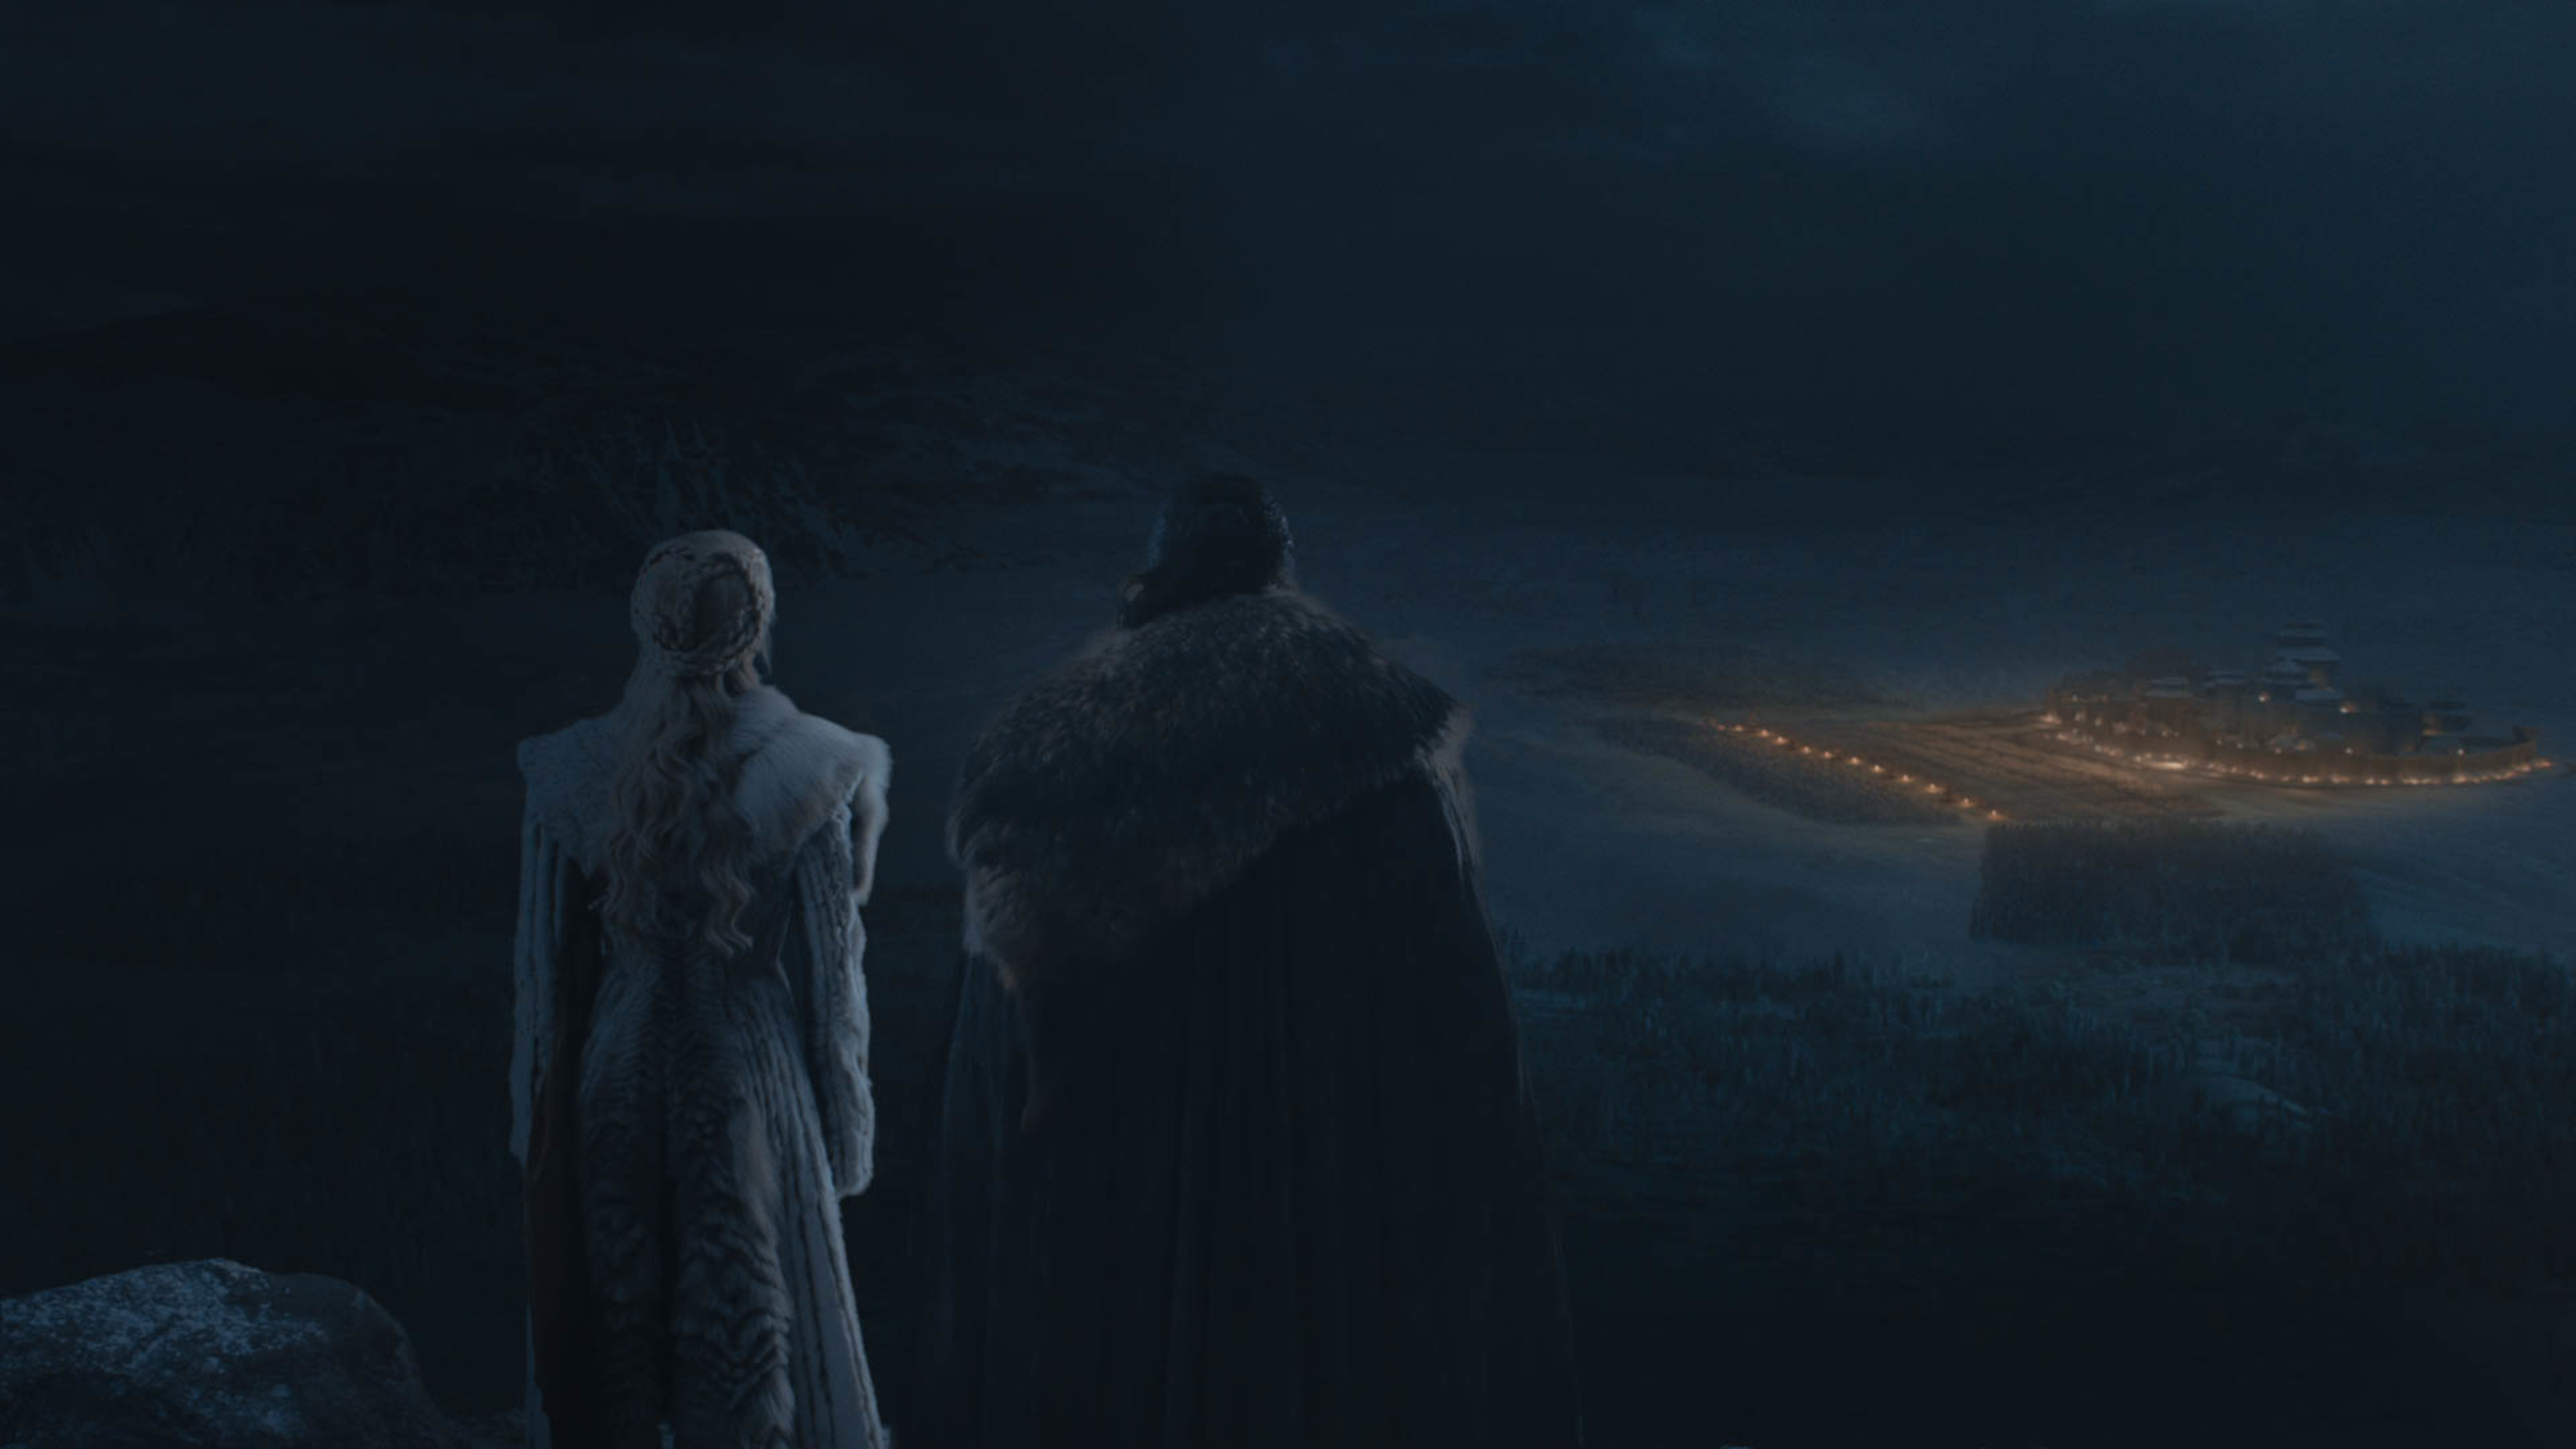 Emilia Clarke as Daenerys Targaryen and Kit Harington as Jon Snow look onto the season 8 episode 3 battle from afar. (Courtesy of HBO)